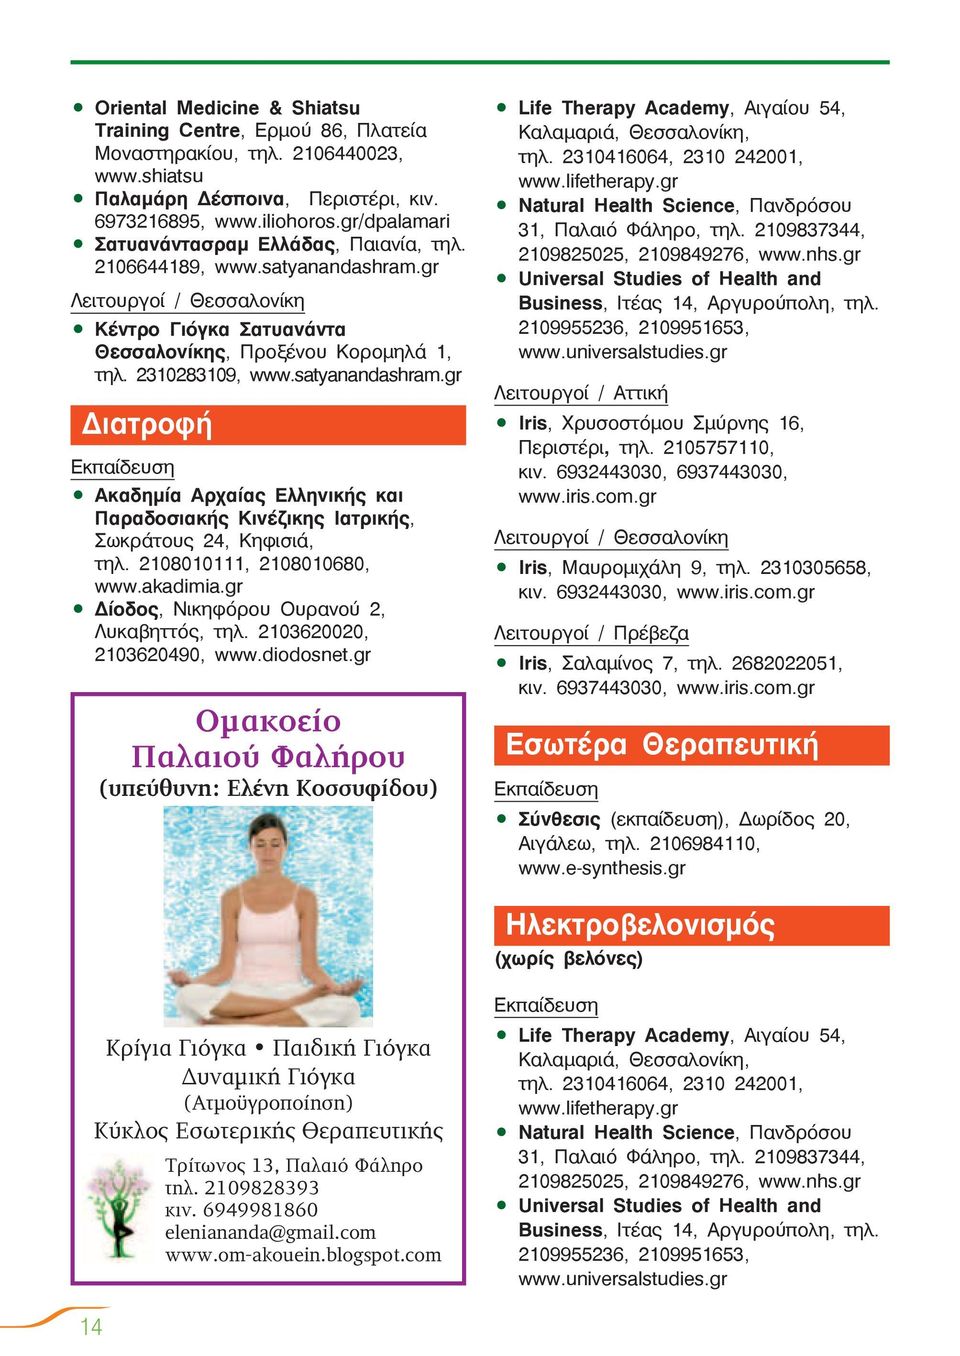 satyanandashram.gr Διατροφή Ακαδημία Αρχαίας Ελληνικής και Παραδοσιακής Κινέζικης Ιατρικής, Σωκράτους 24, Κηφισιά, τηλ. 2108010111, 2108010680, www.akadimia.